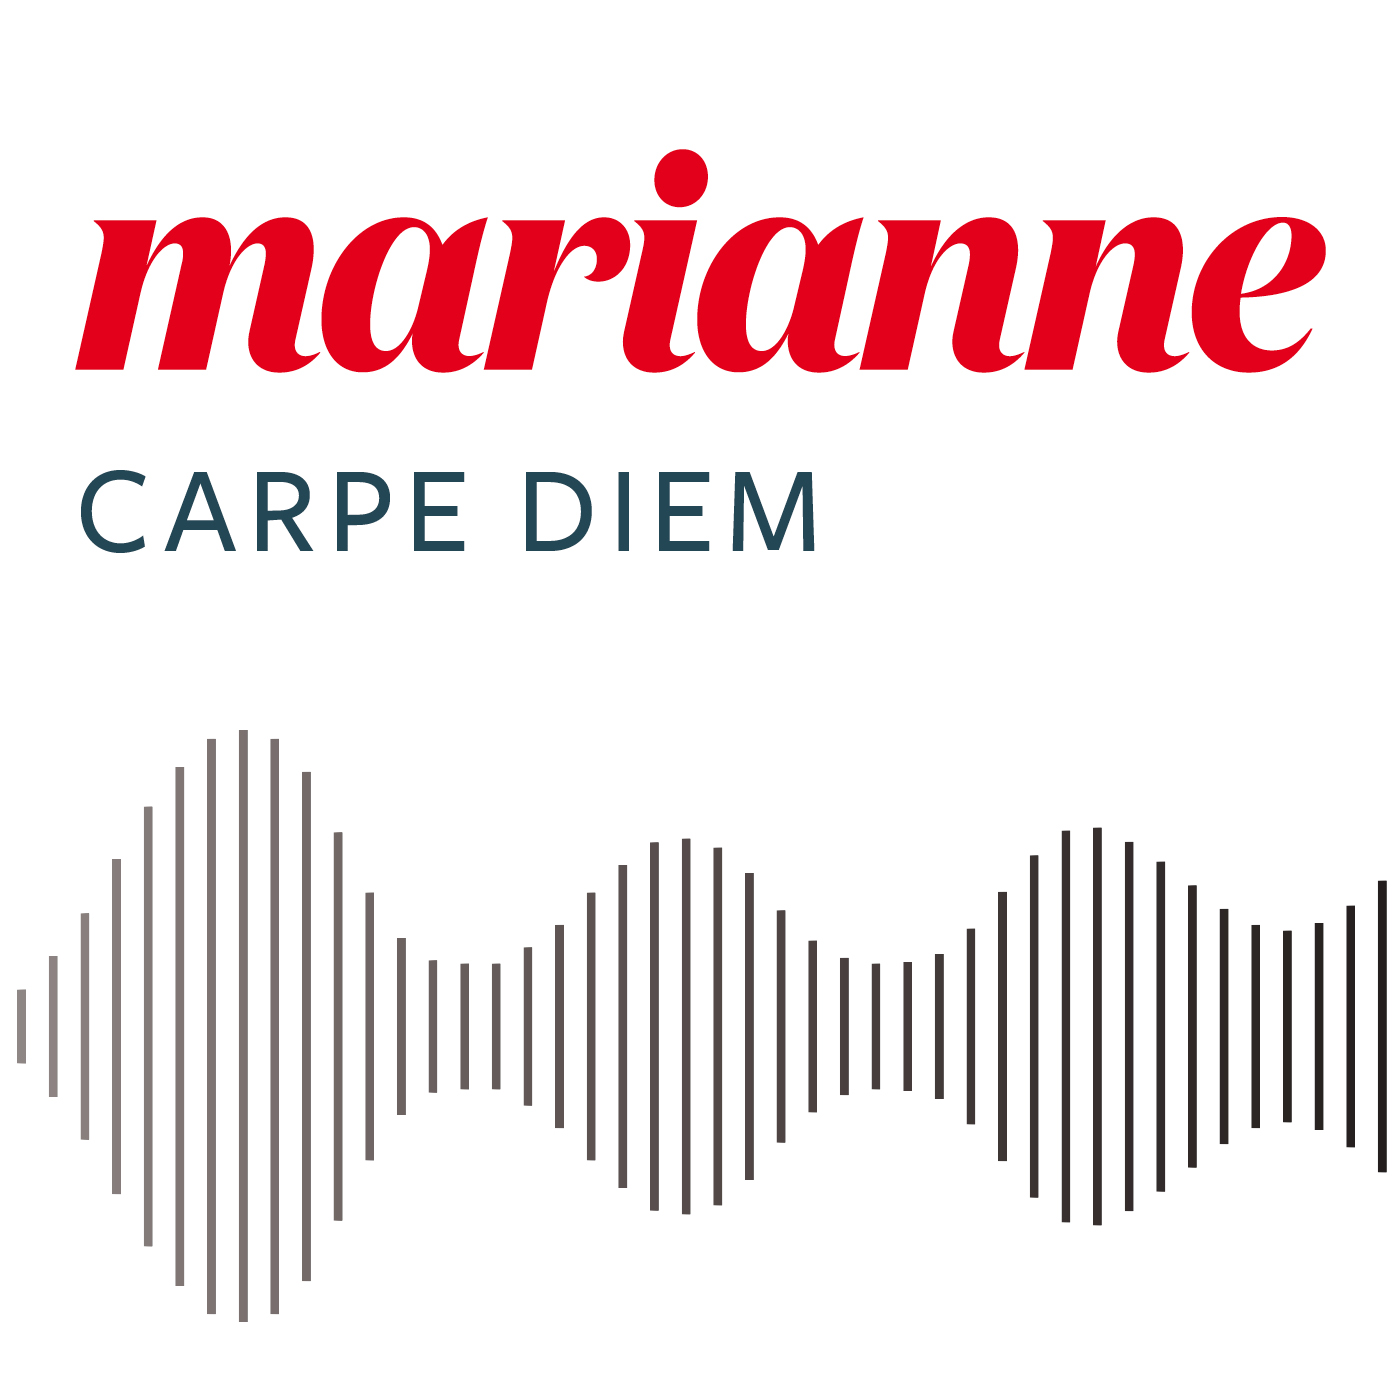 Marianne - Carpe Diem